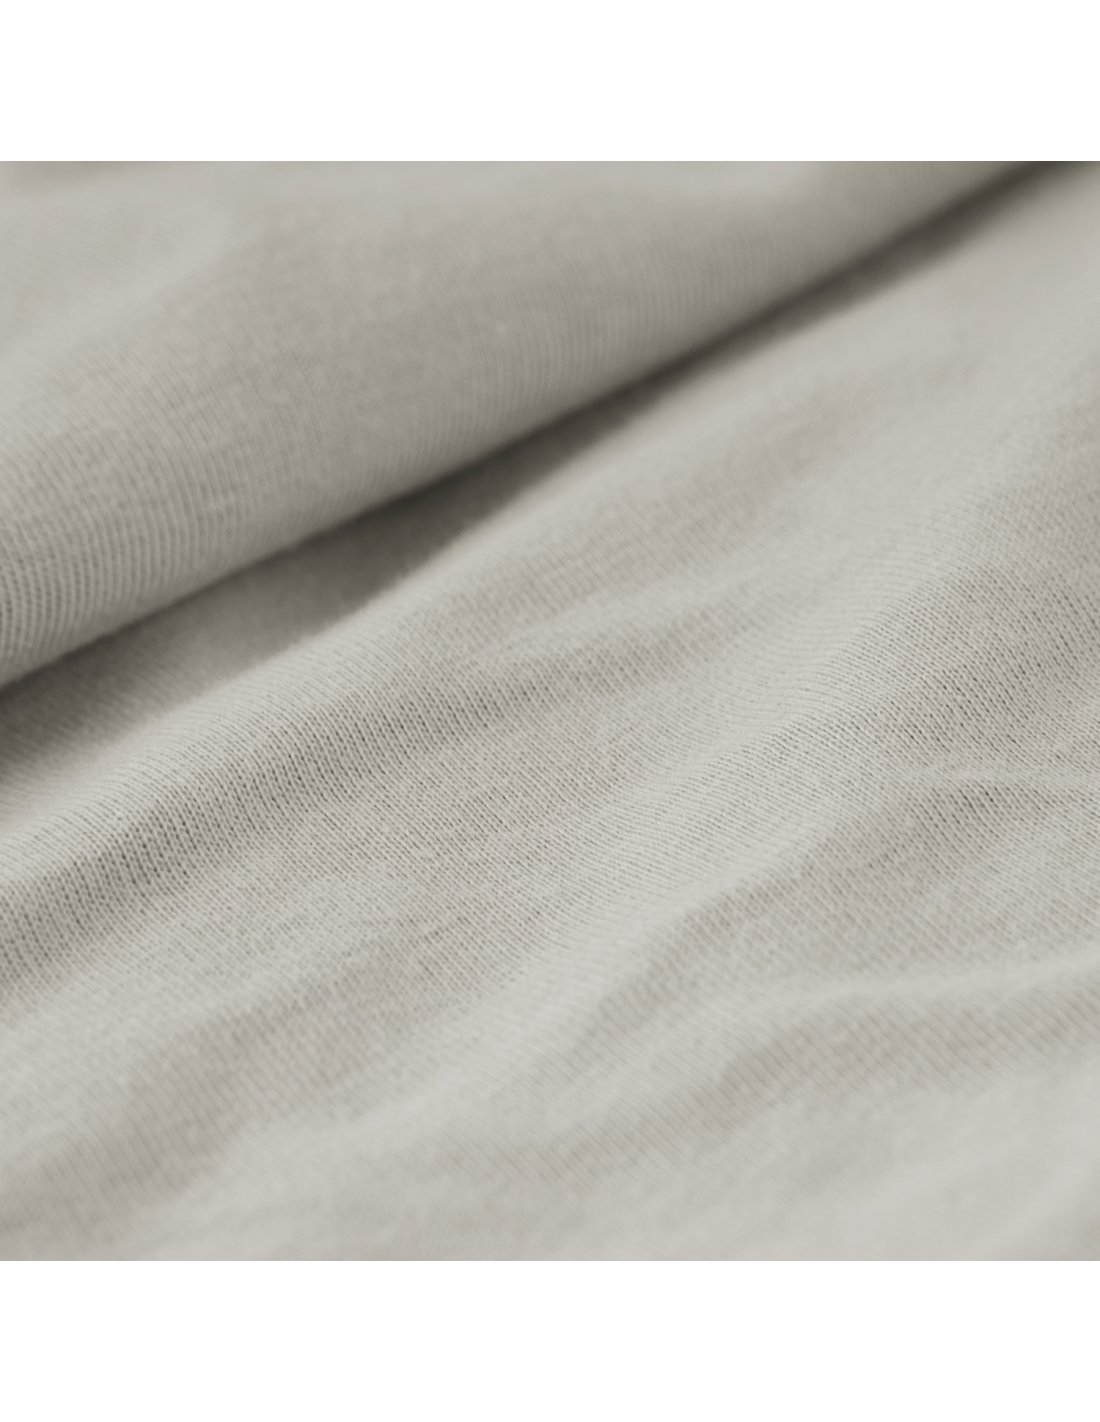 Maison Exclusive Sábanas bajeras jersey 2 uds algodón gris 160x200 cm